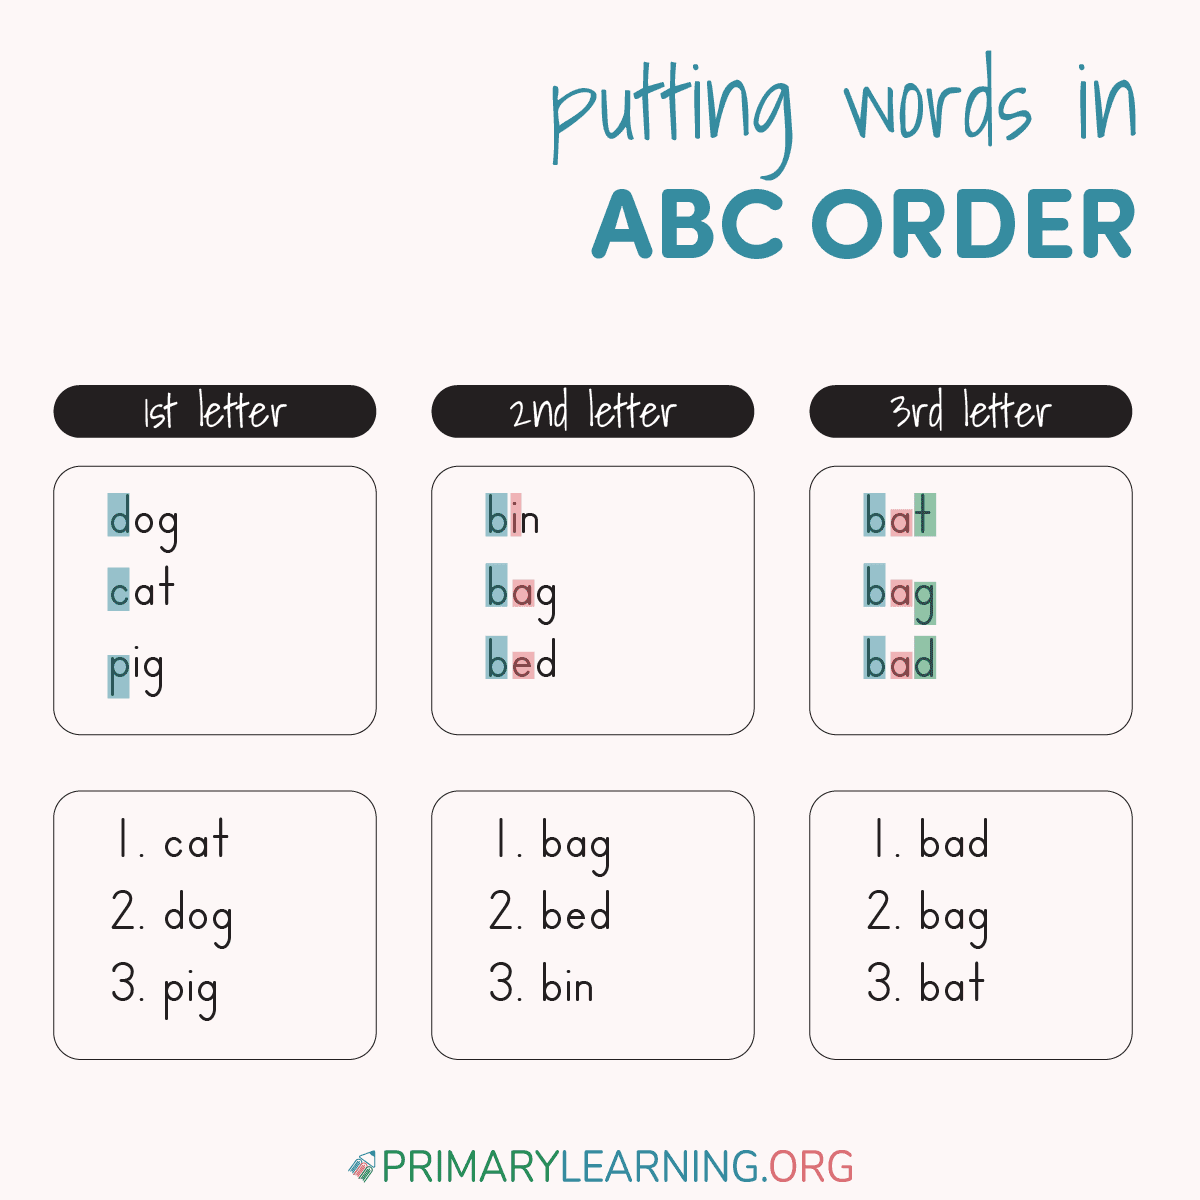 spelling words in abc order